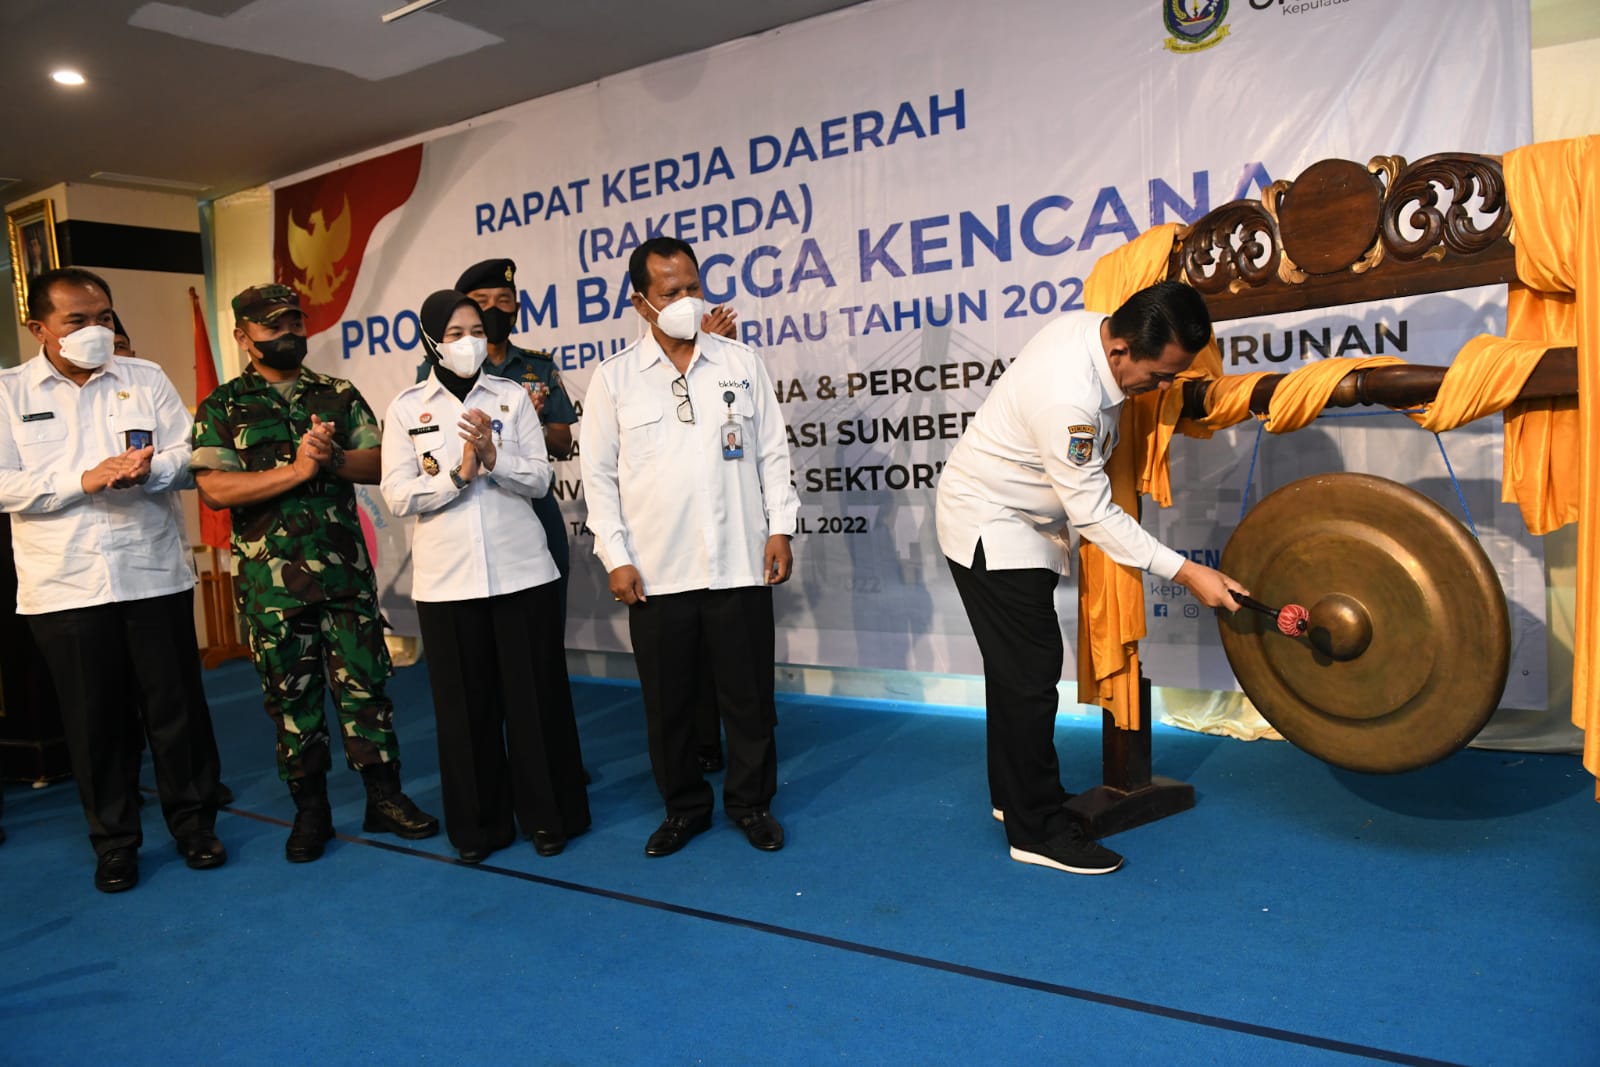 Gubernur Kepulauan Riau H. Ansar Ahmad resmi membuka Rapat Kerja Daerah (Rakerda) Bangga Kencana yang digelar Badan Kependudukan Dan Keluarga Berencana Nasional (BKKBN) Perwakilan Kepri di Hotel CK Tanjungpinang, Rabu (13/4).